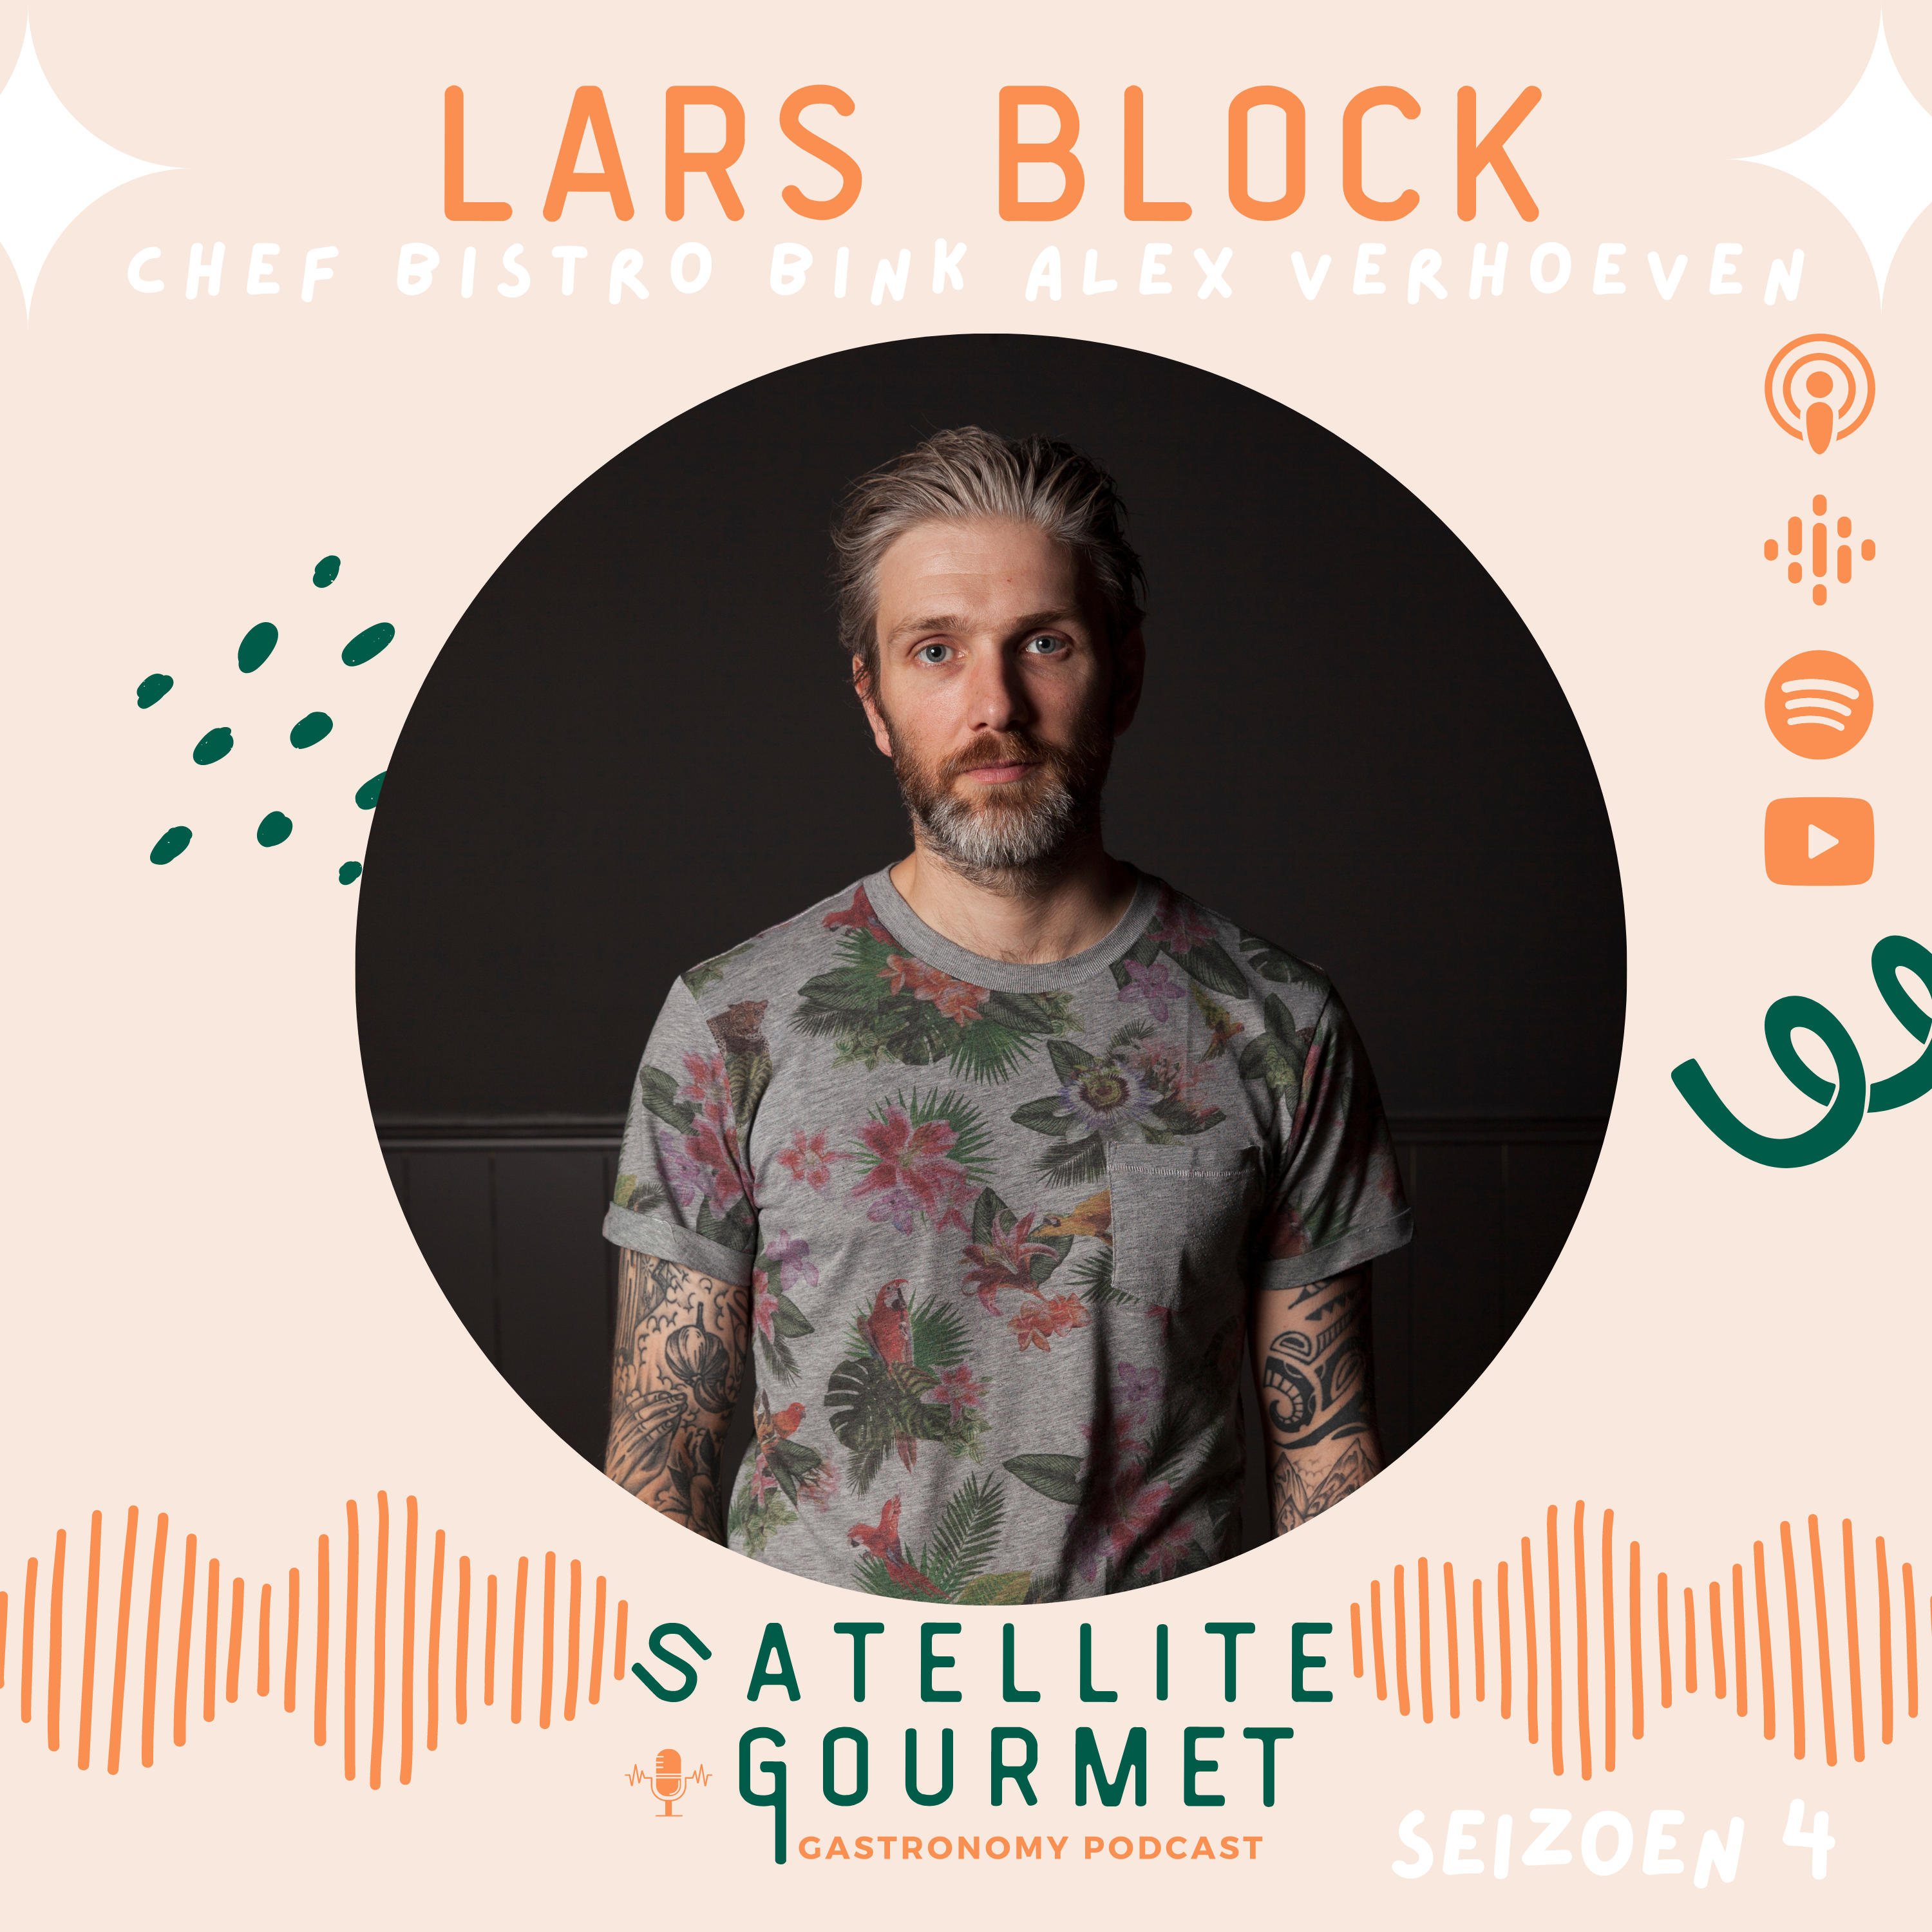 Lars Block